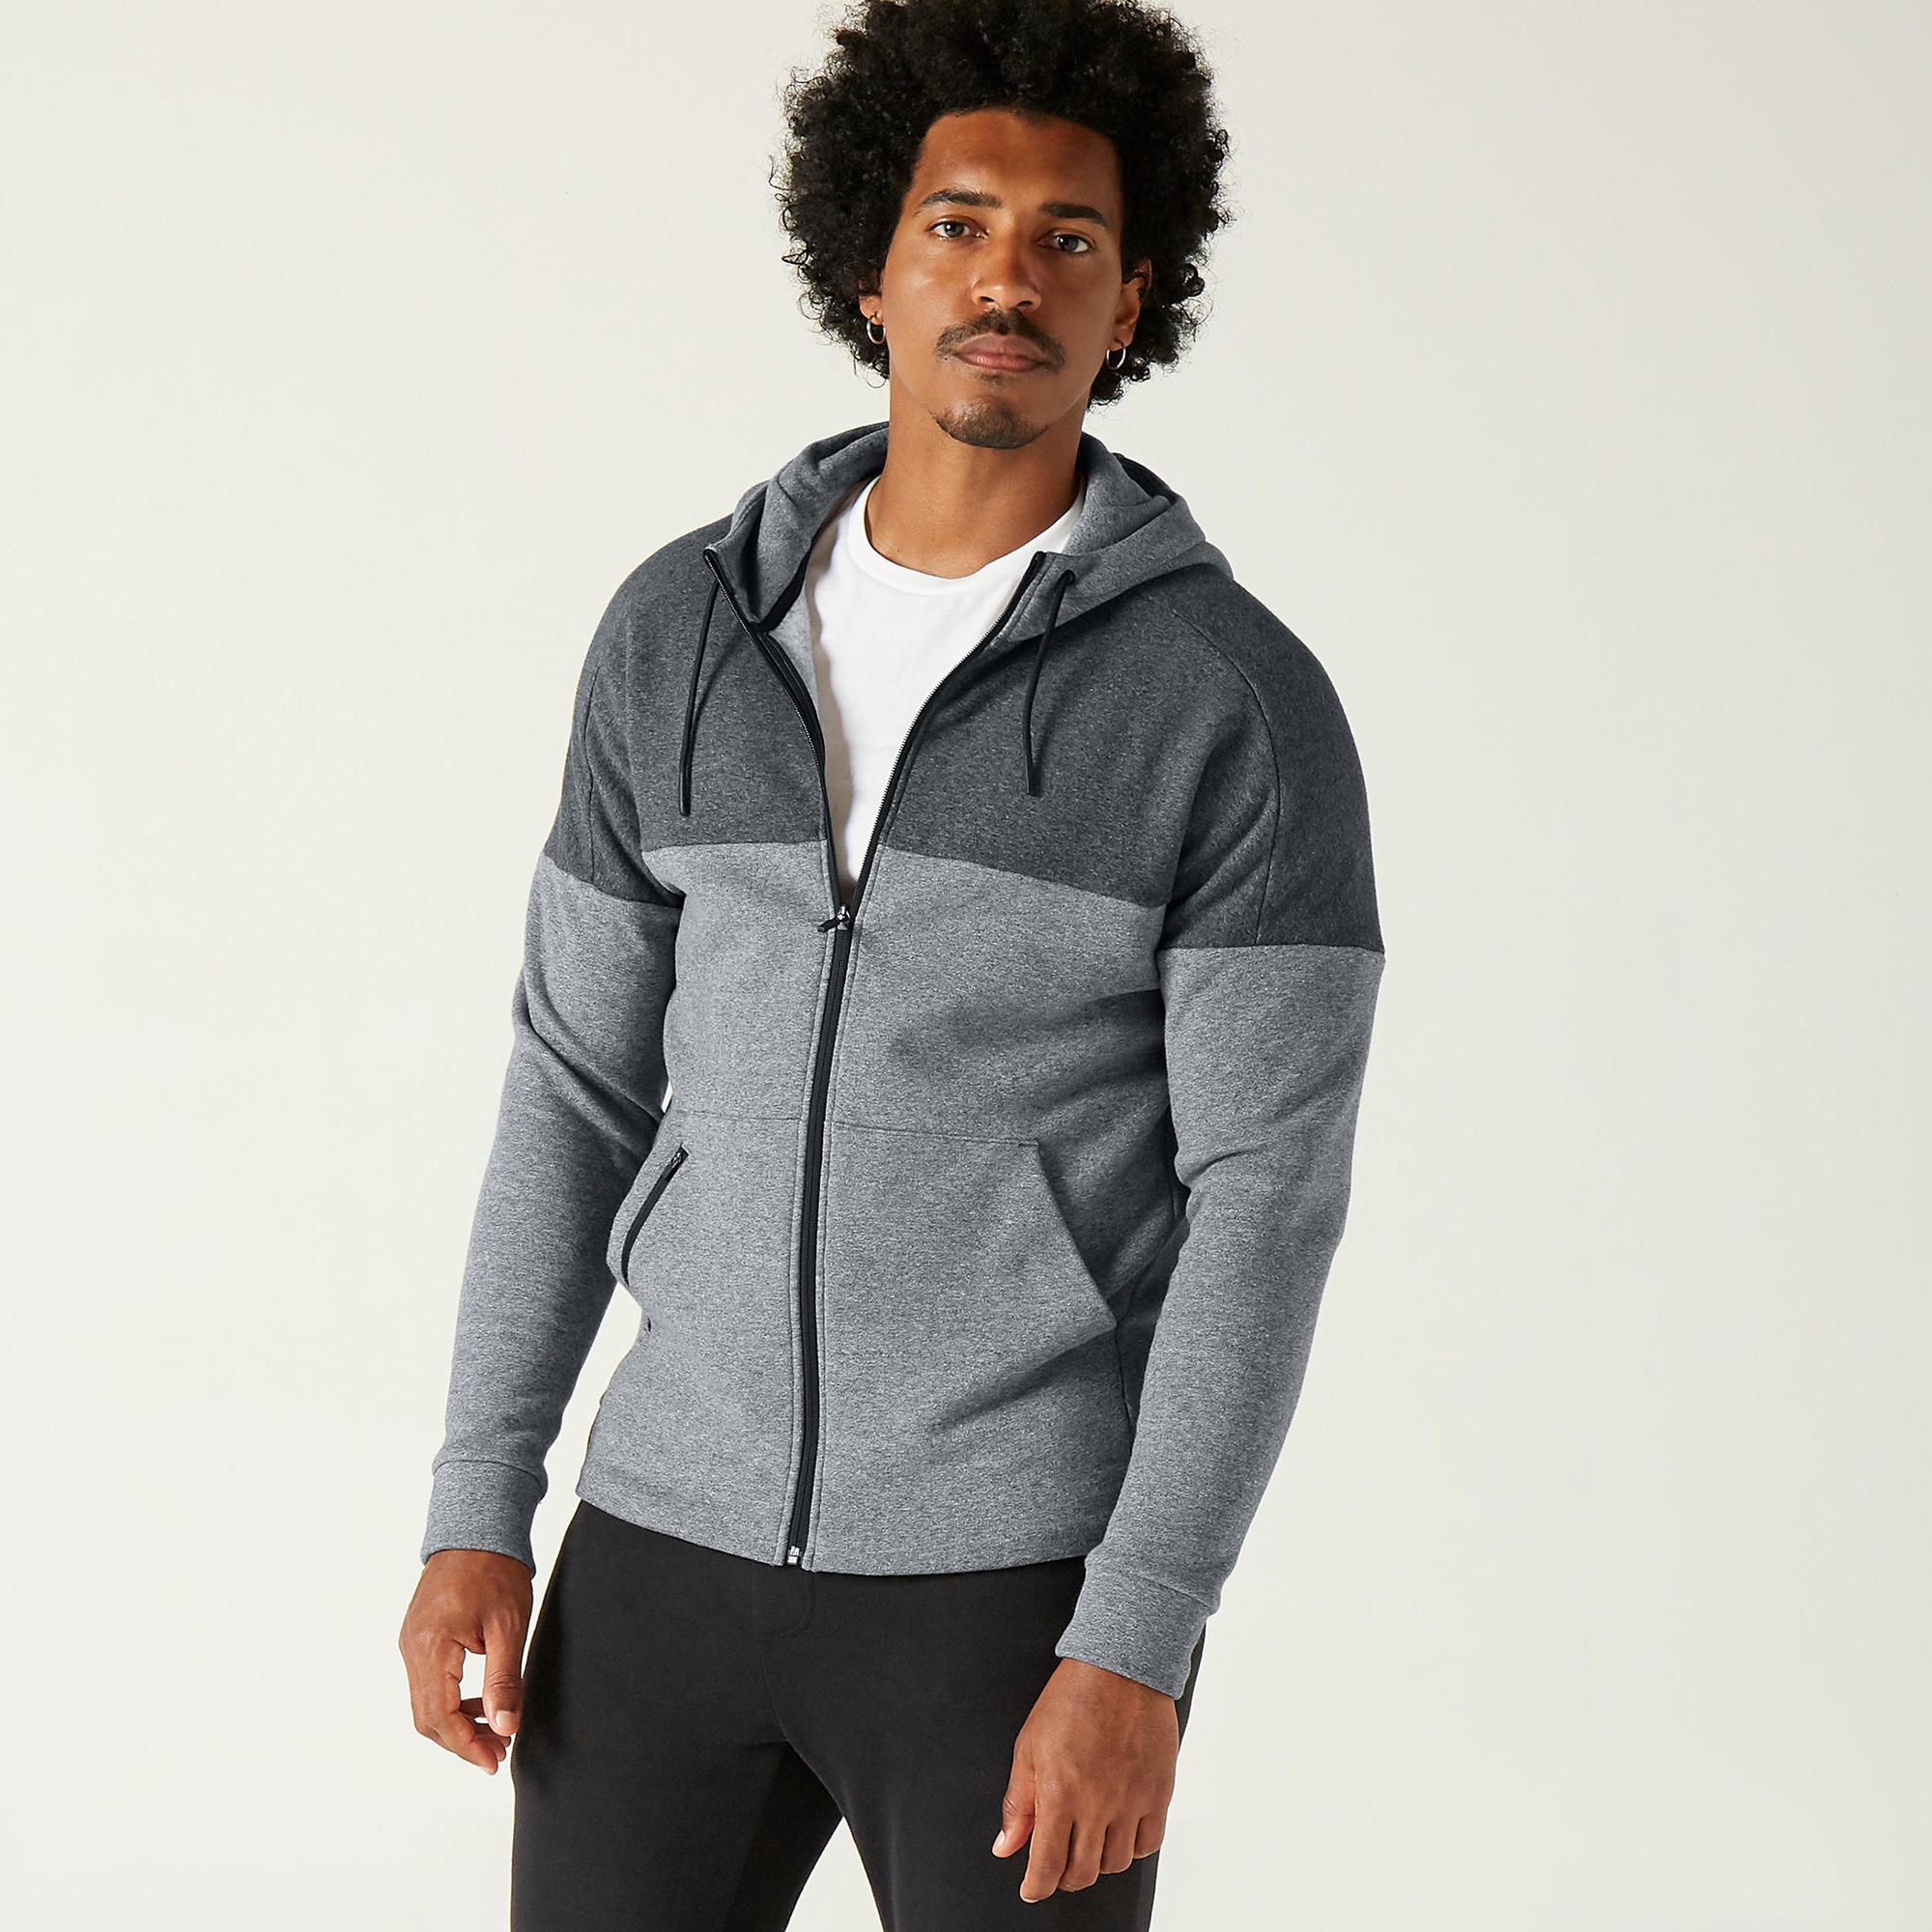 Men's Hooded Jacket 520 - Grey Marl | Domyos by Decathlon